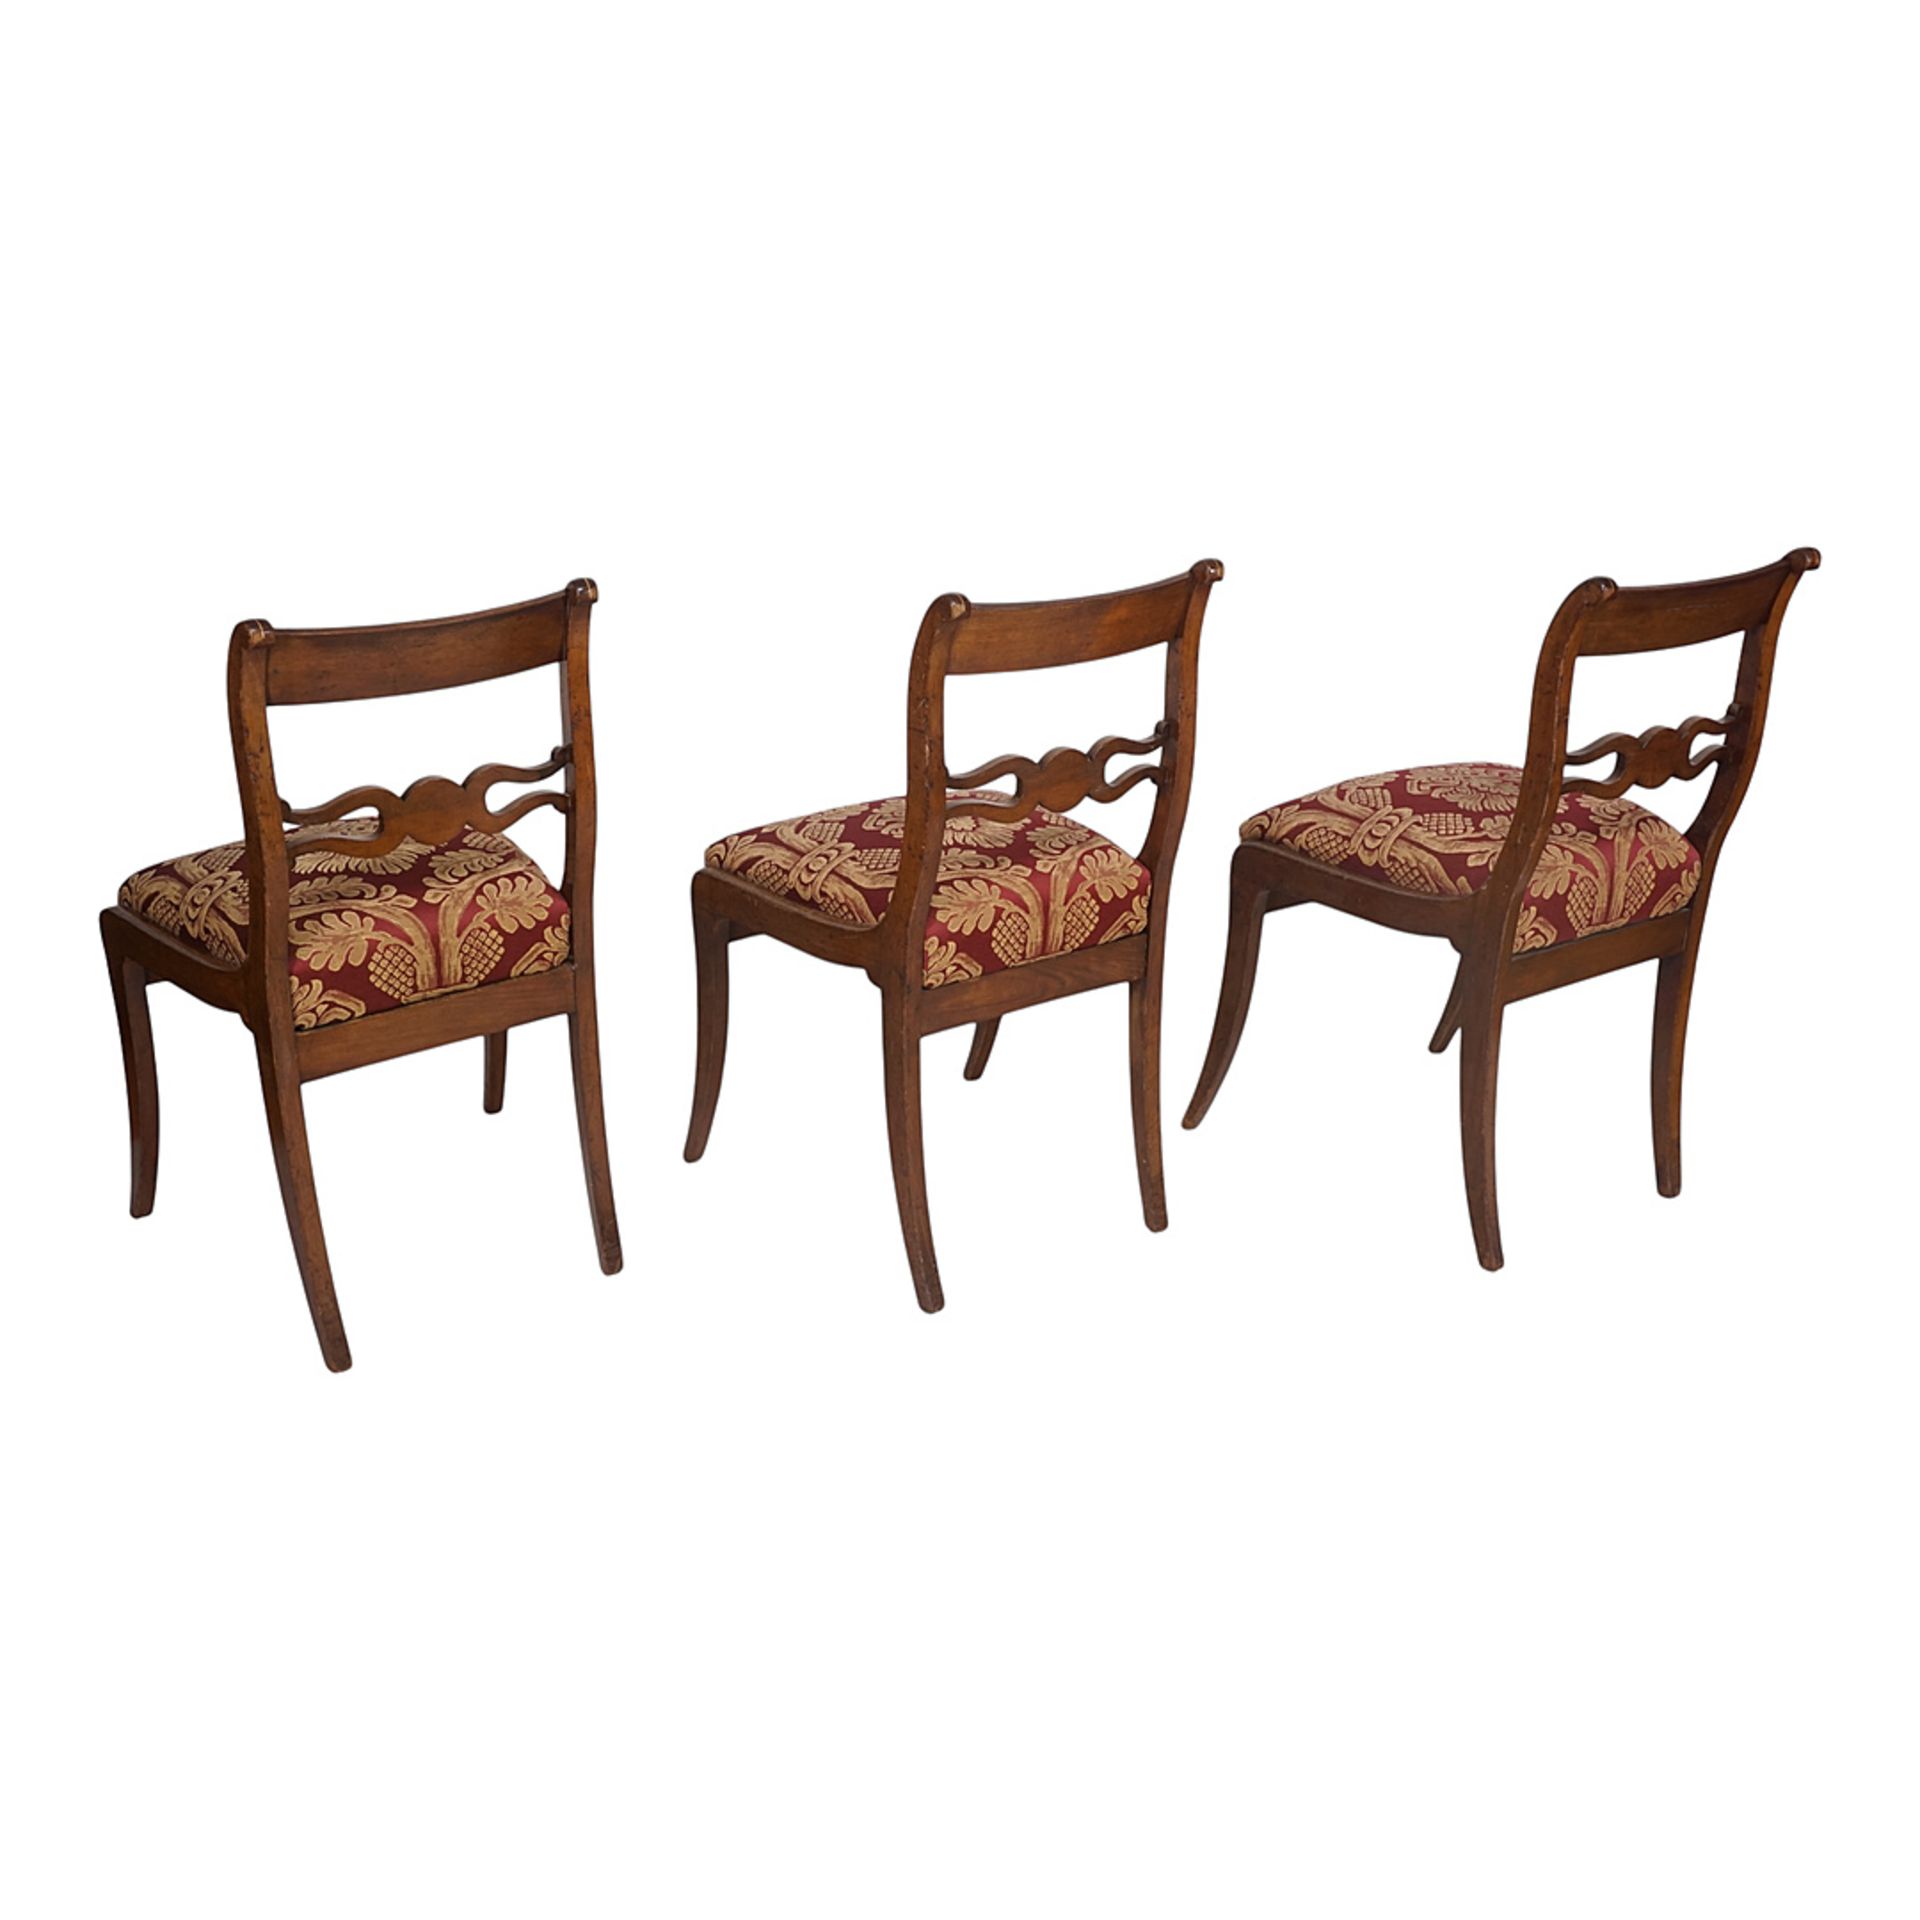 Three Biedermeier chairs, Germany / France - Image 2 of 4